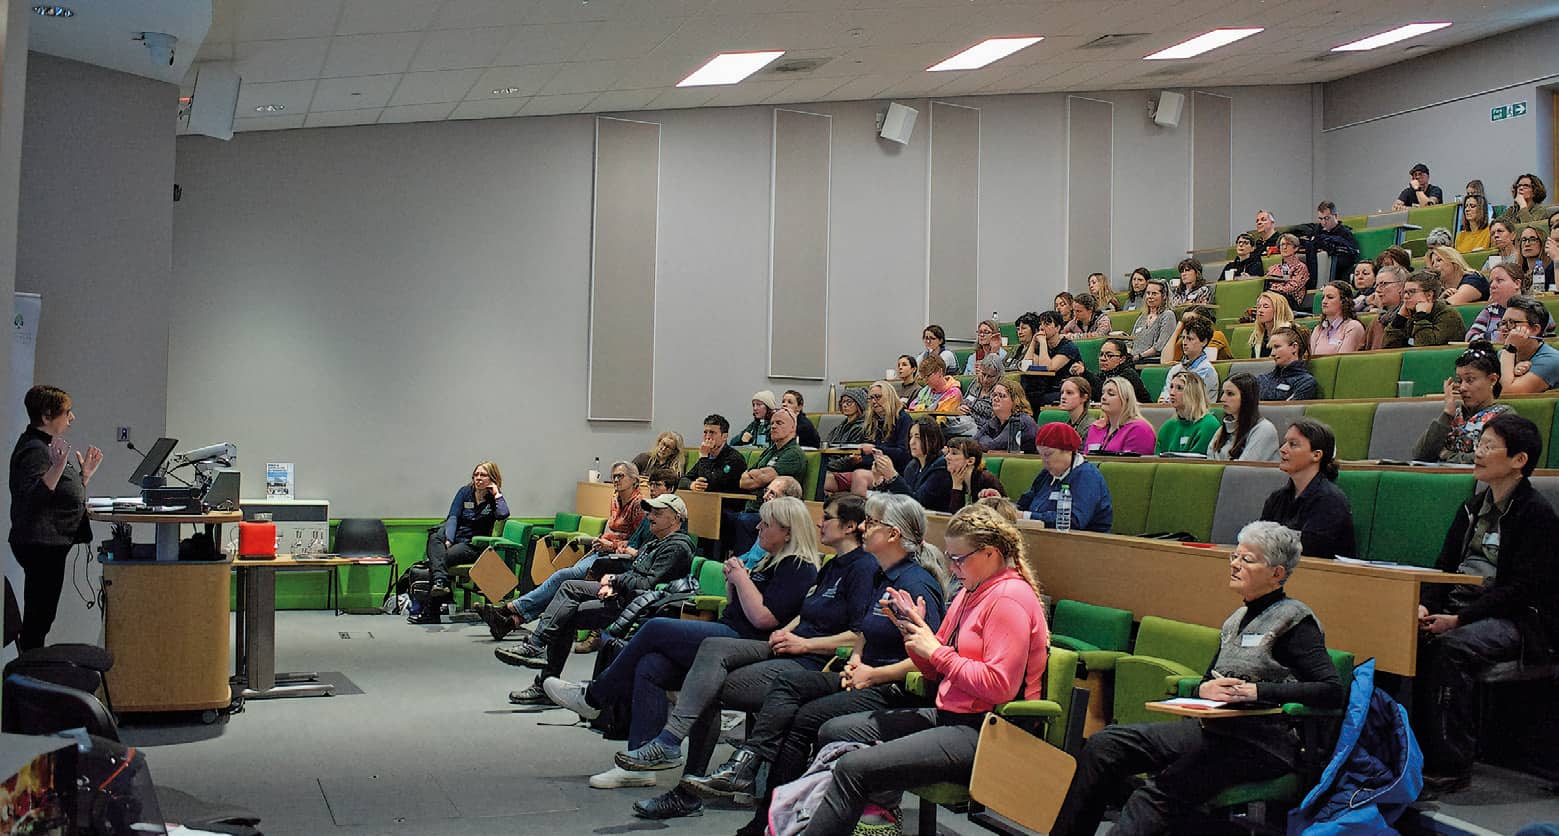 Delegates enjoy morning talks in the Jodrell lecture theatre.